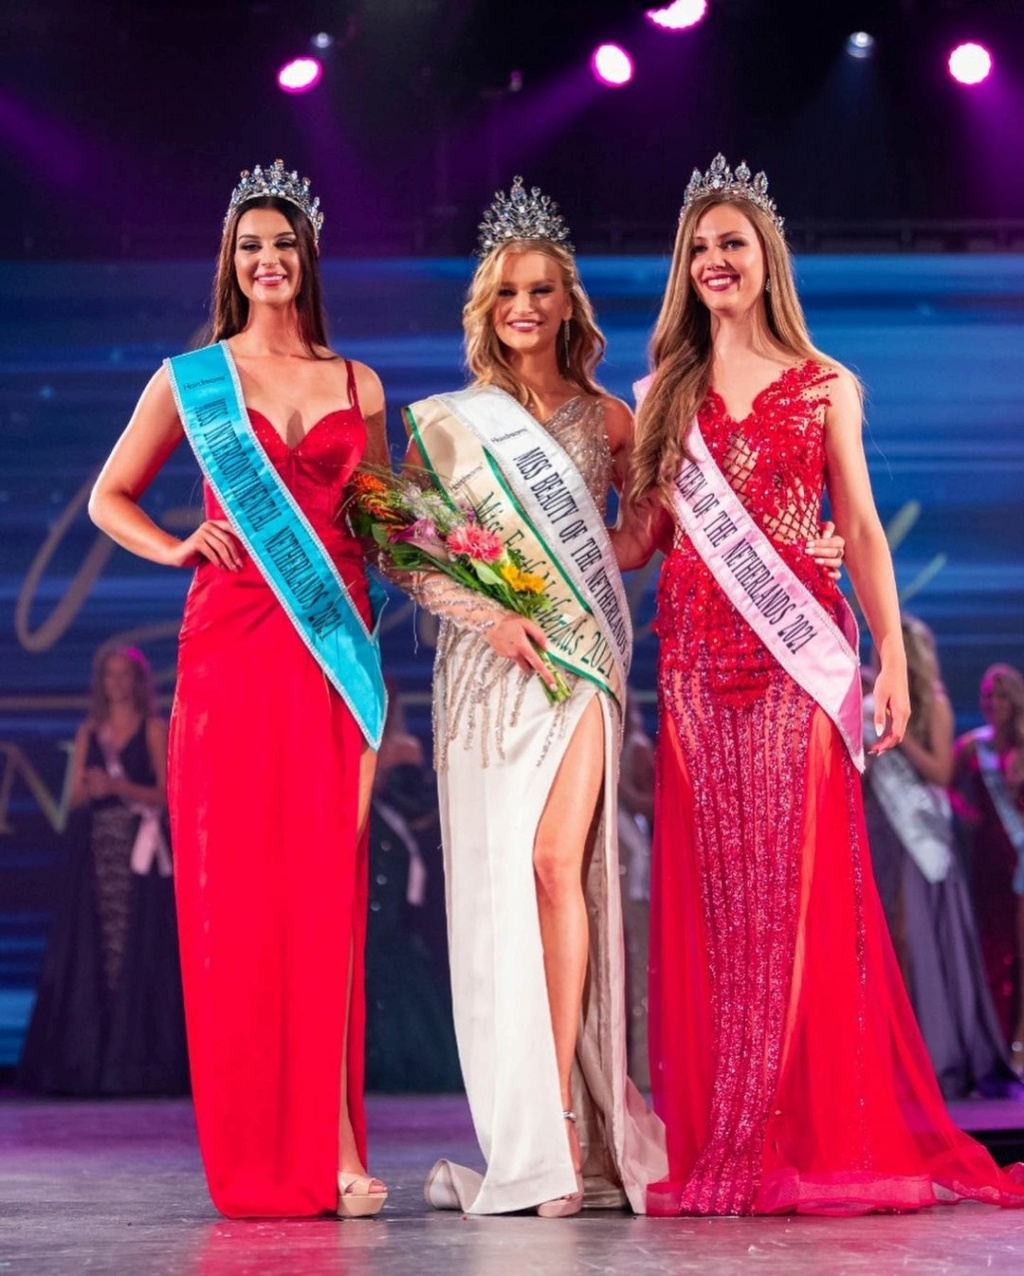 Road to Miss Earth Netherlands 2021 is Saartje Langstraat 24094311